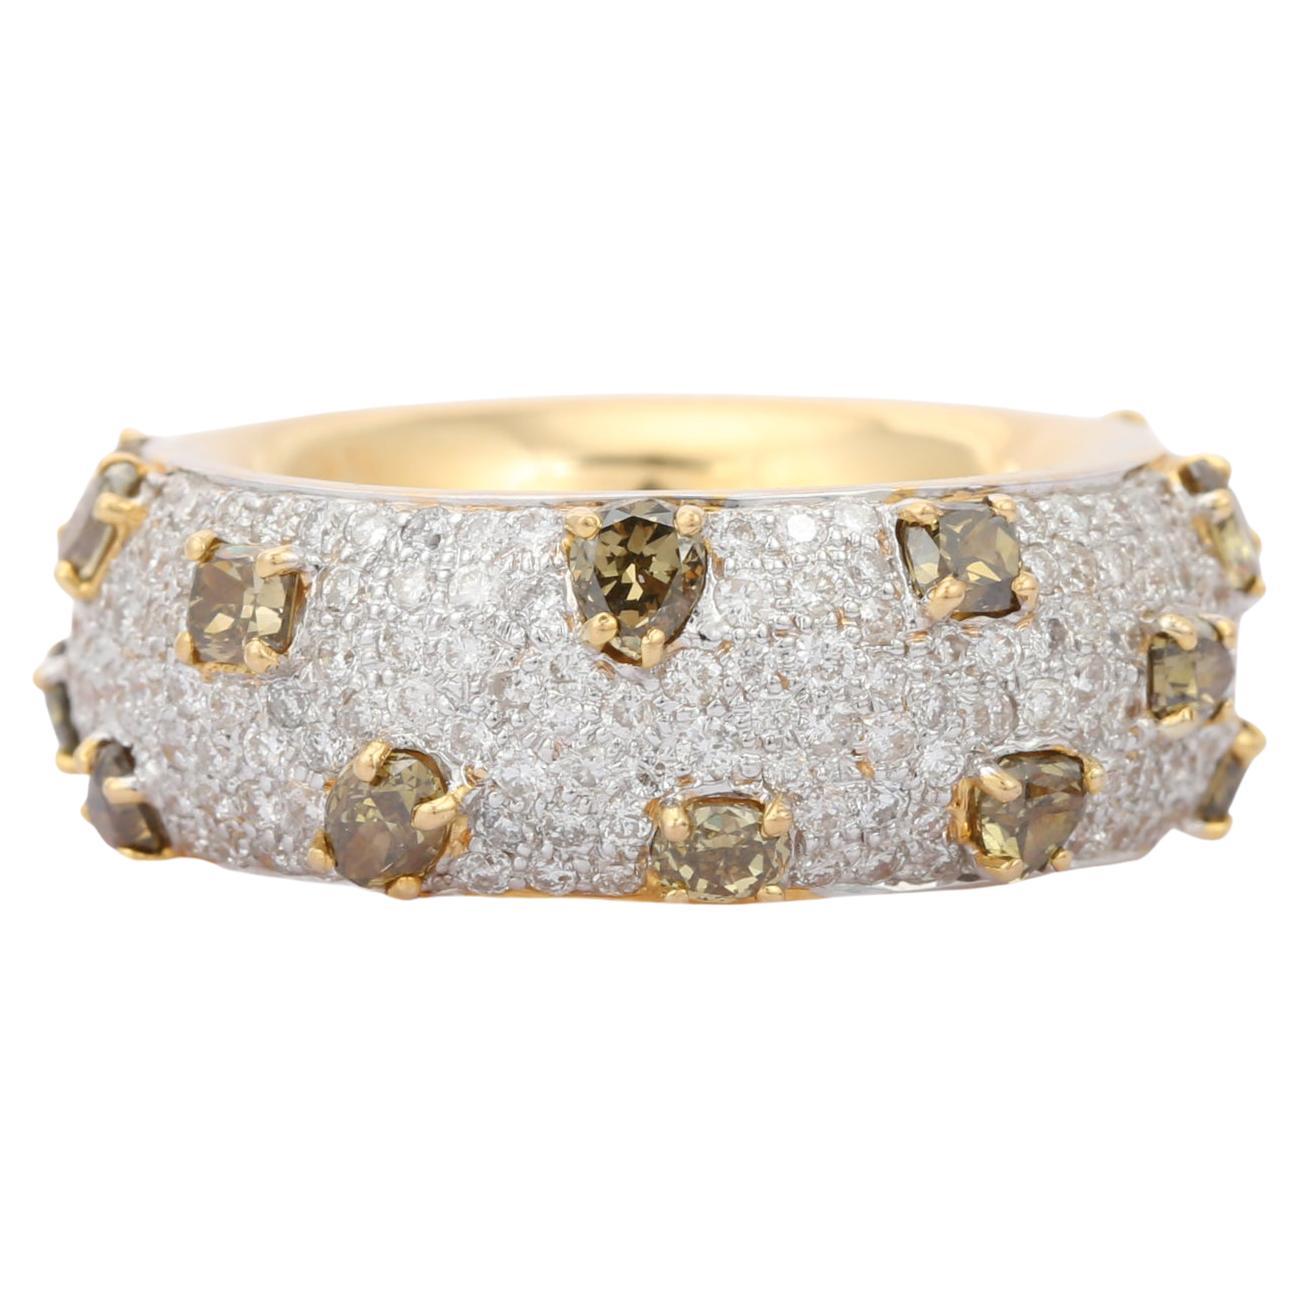 18 Karat Solid Yellow Gold 6.3 Carats Diamond Wedding Band Ring